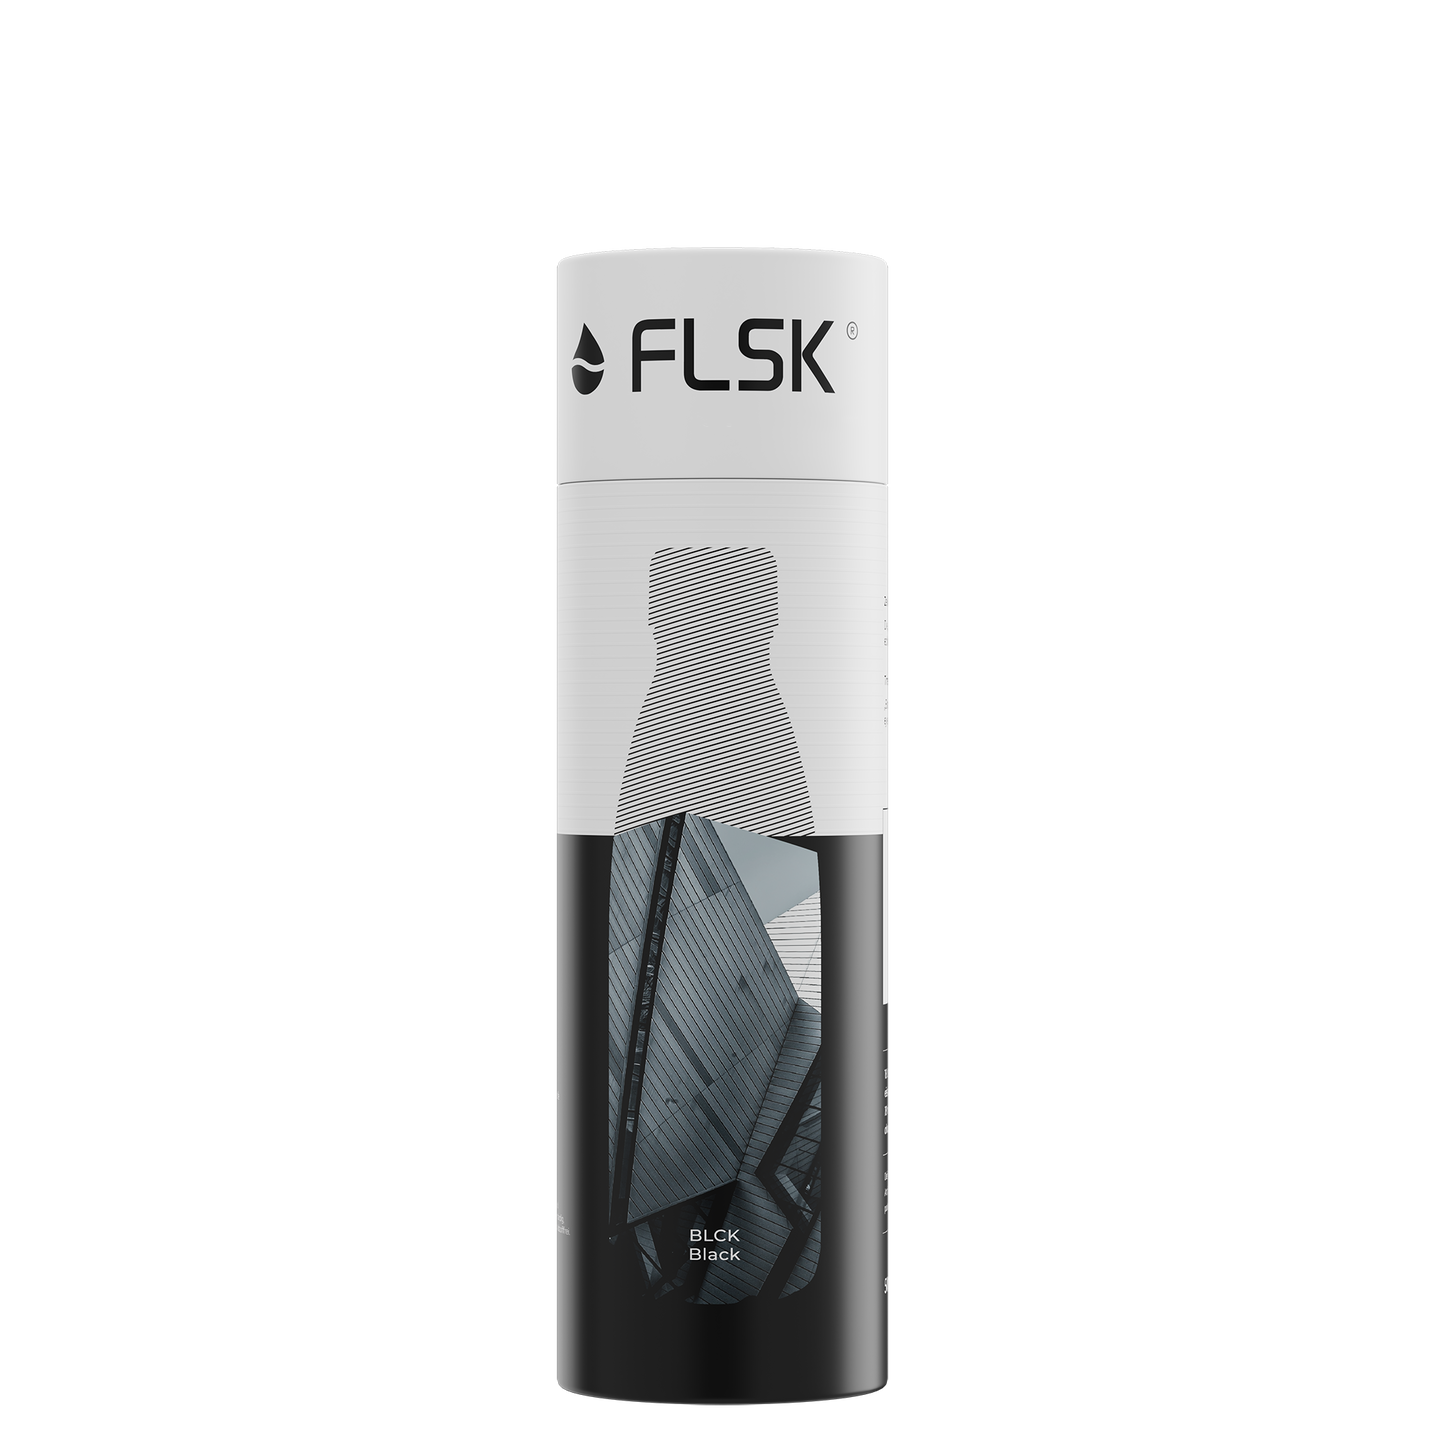 FLSK Trinkflasche aus Edelstahl